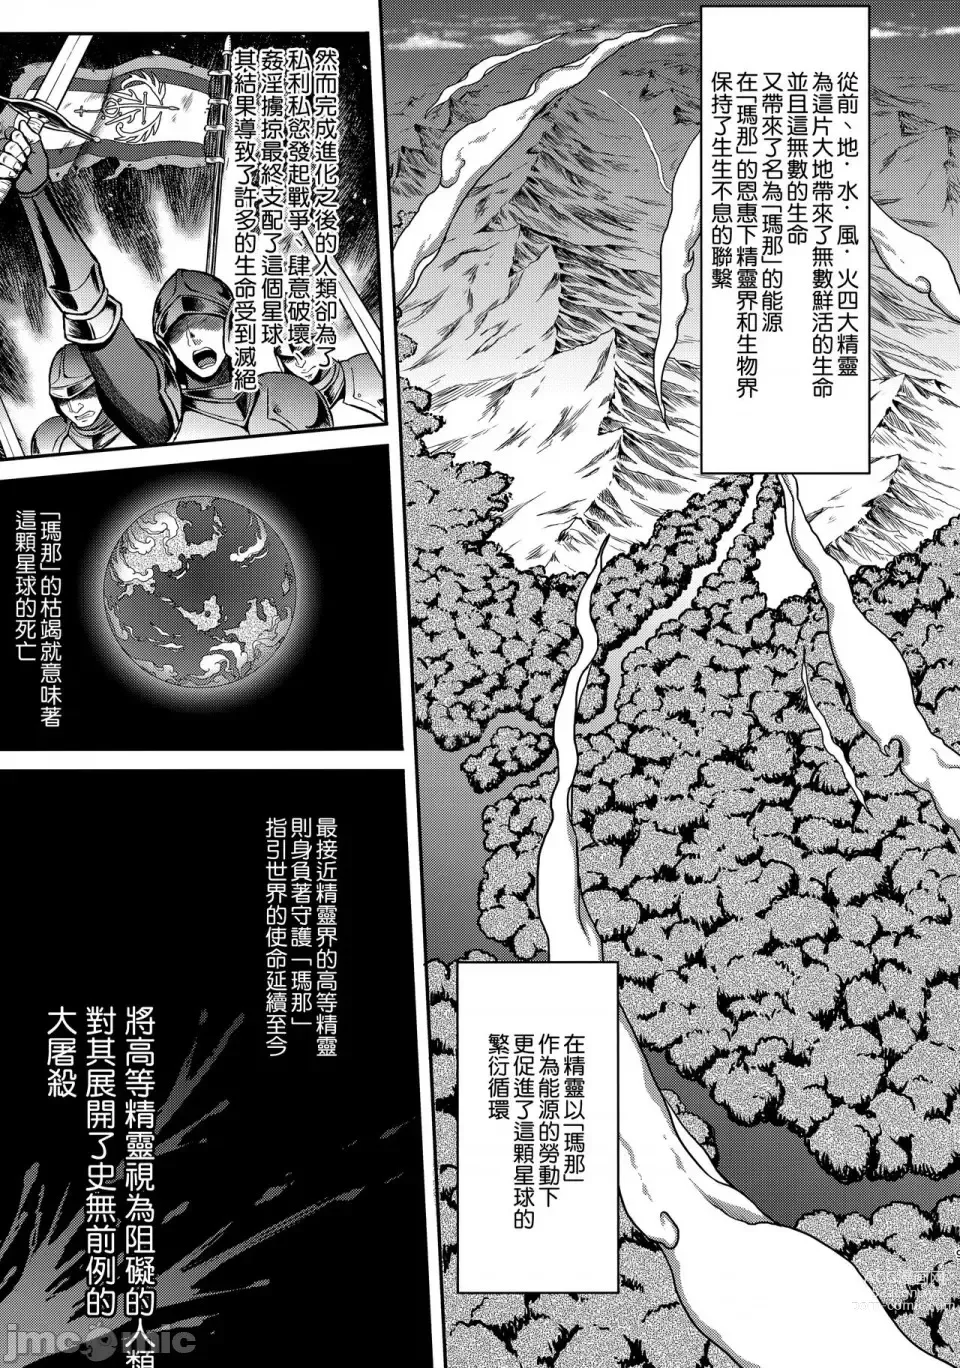 Page 7 of manga Tasogare no Shou Elf 1-6